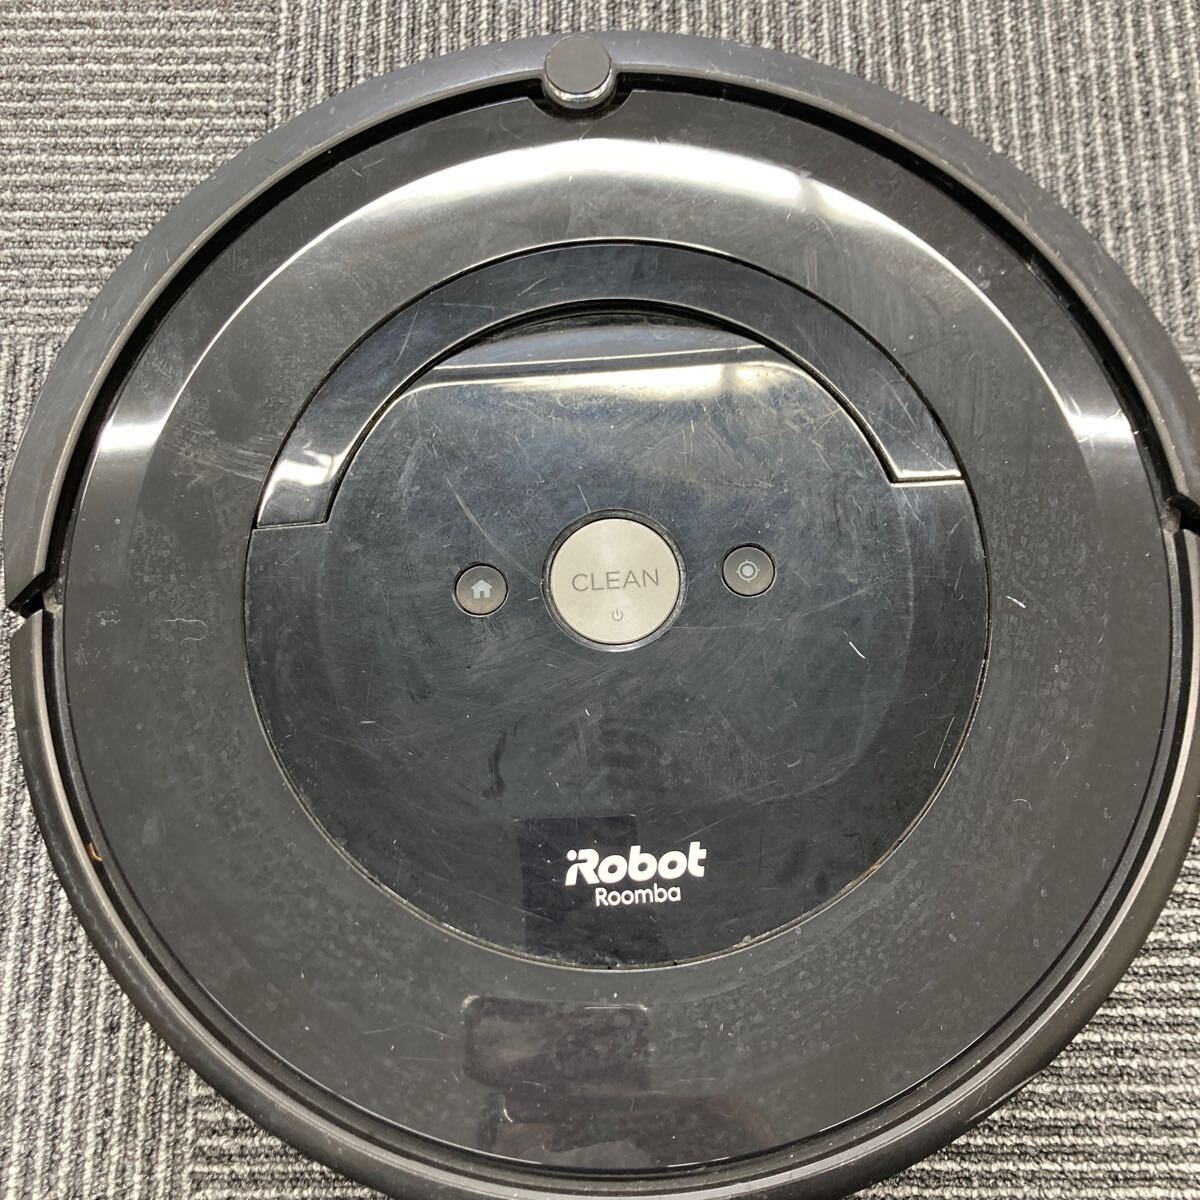 ％iRobot アイロボット Roomba ルンバ ロボット掃除機 センサー_画像2